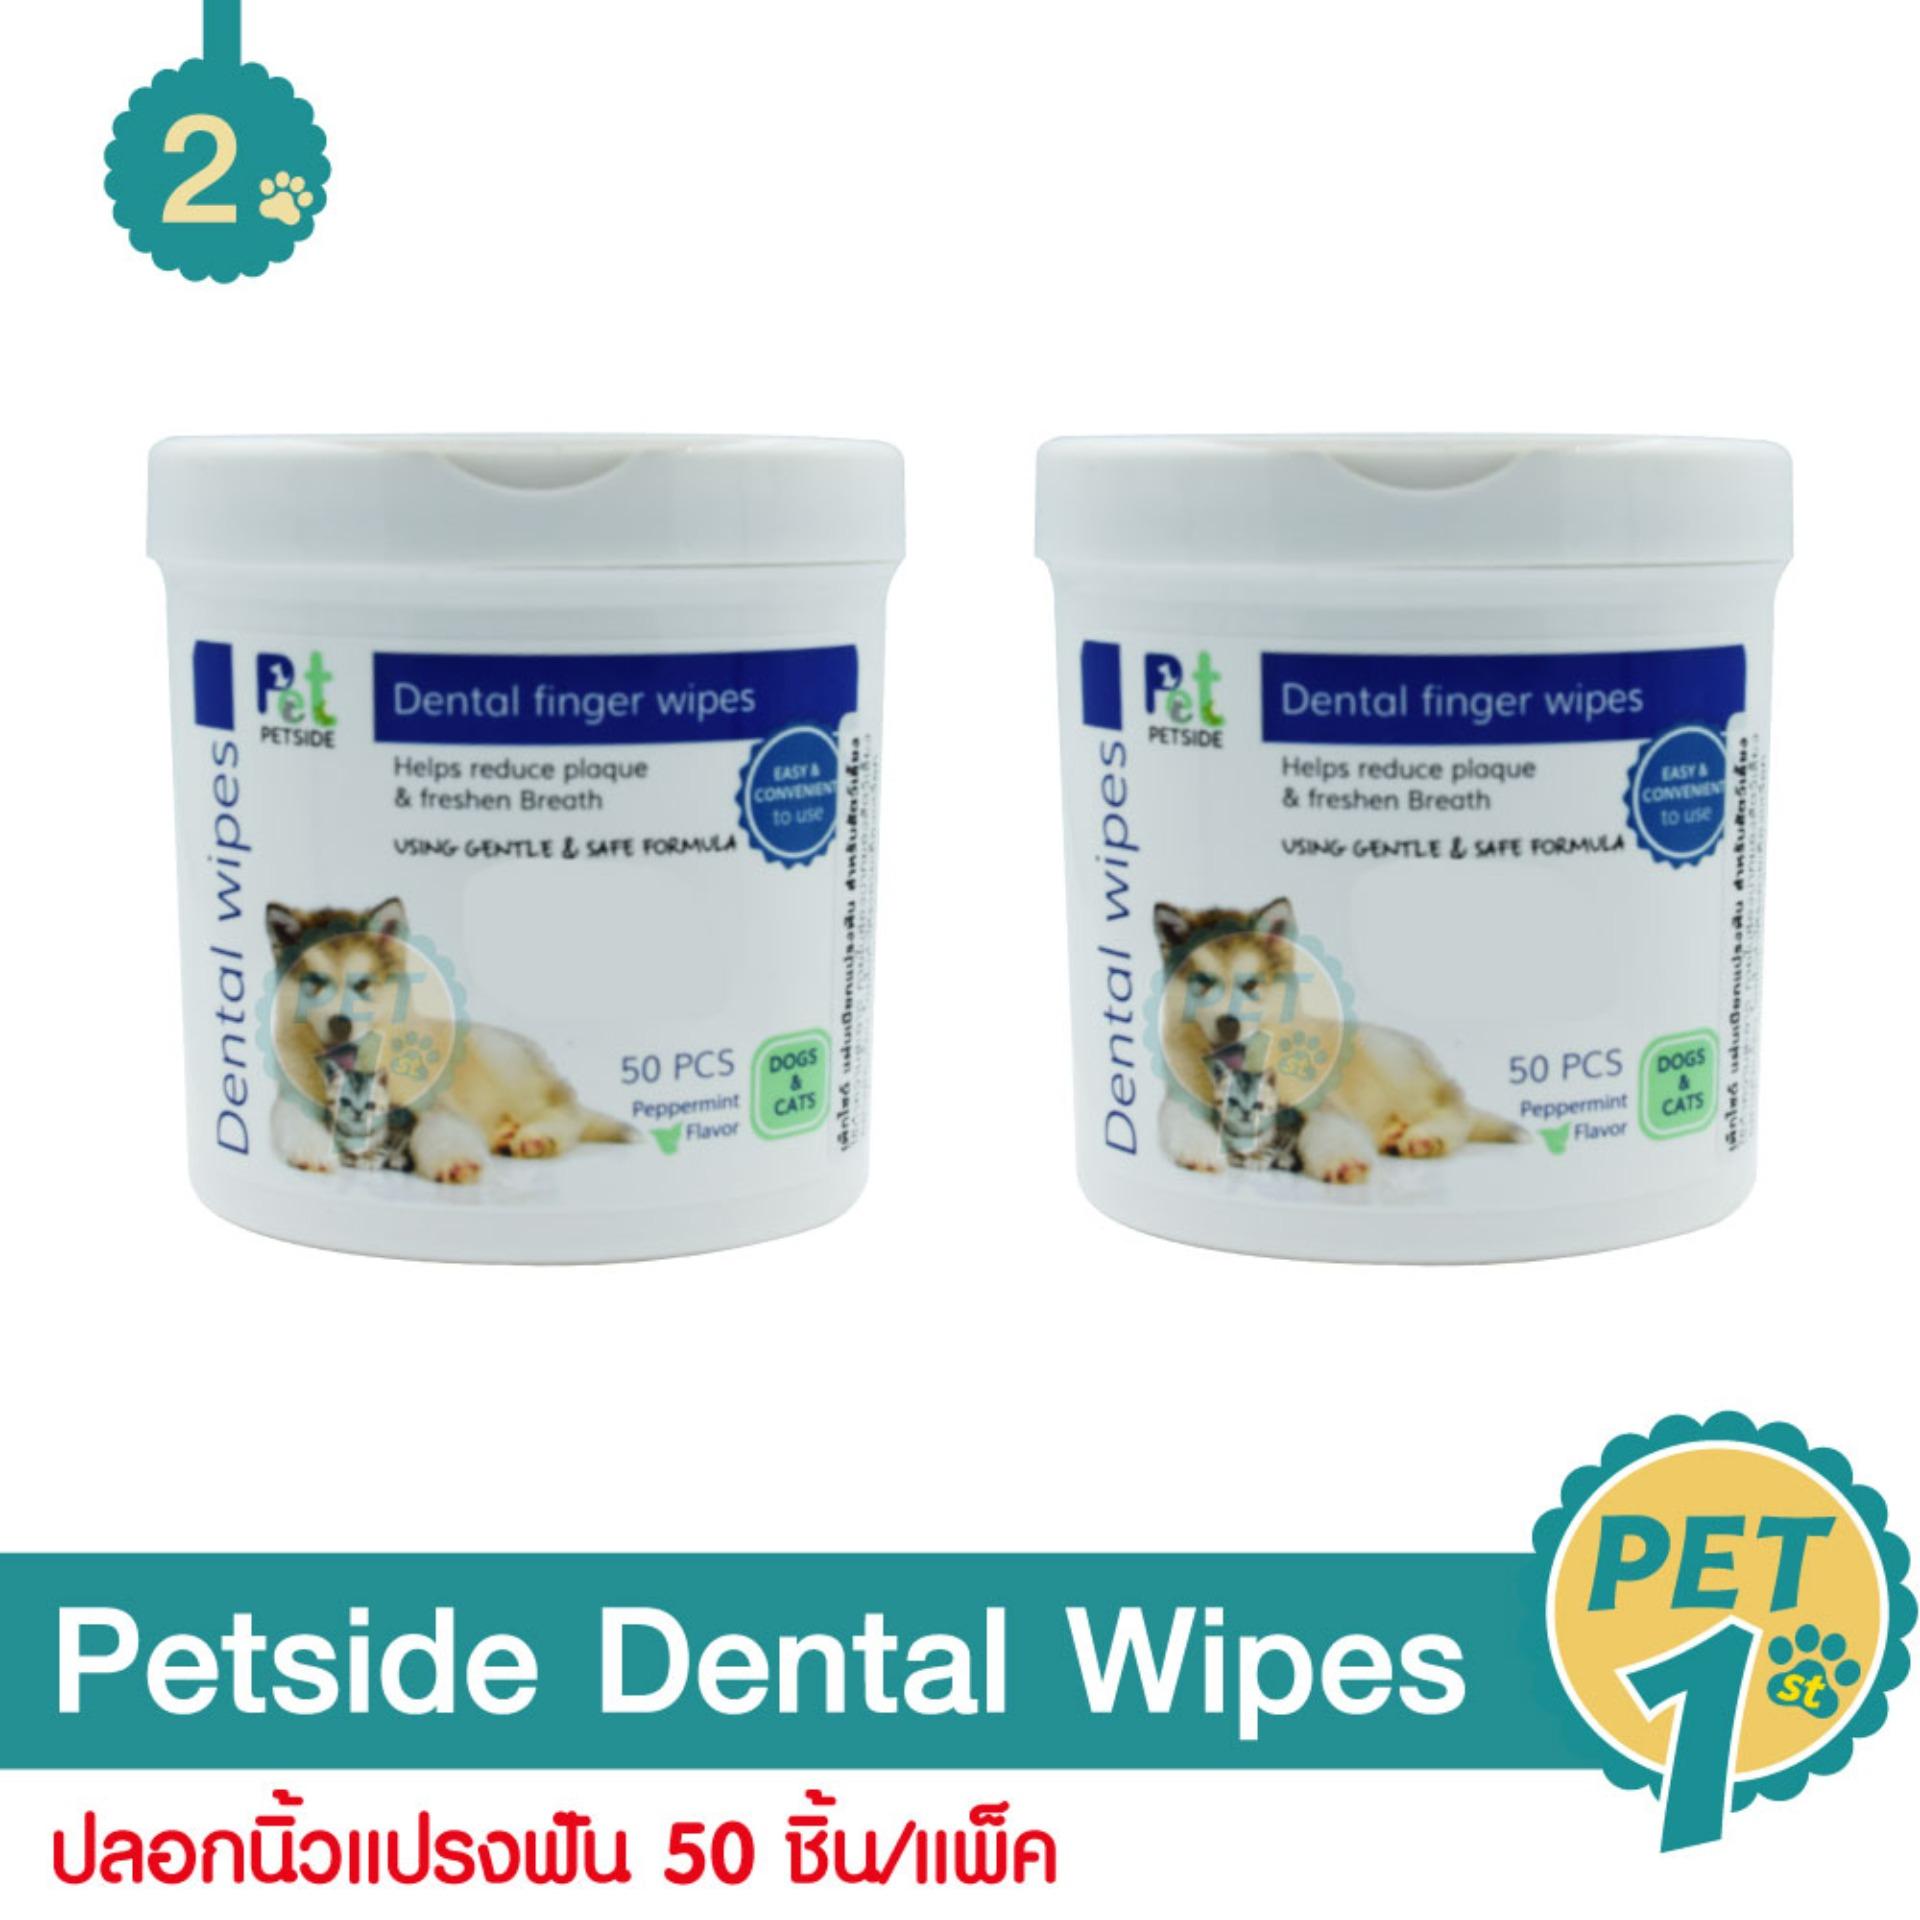 Petside Dental Wipes ปลอกนิ้วแปรงฟัน ลดกลิ่นปาก ลดคราบหินปูน ใช้ง่าย สำหรับสุนัขและแมว (50 ชิ้น/แพ็ค) - 2 แพ็ค